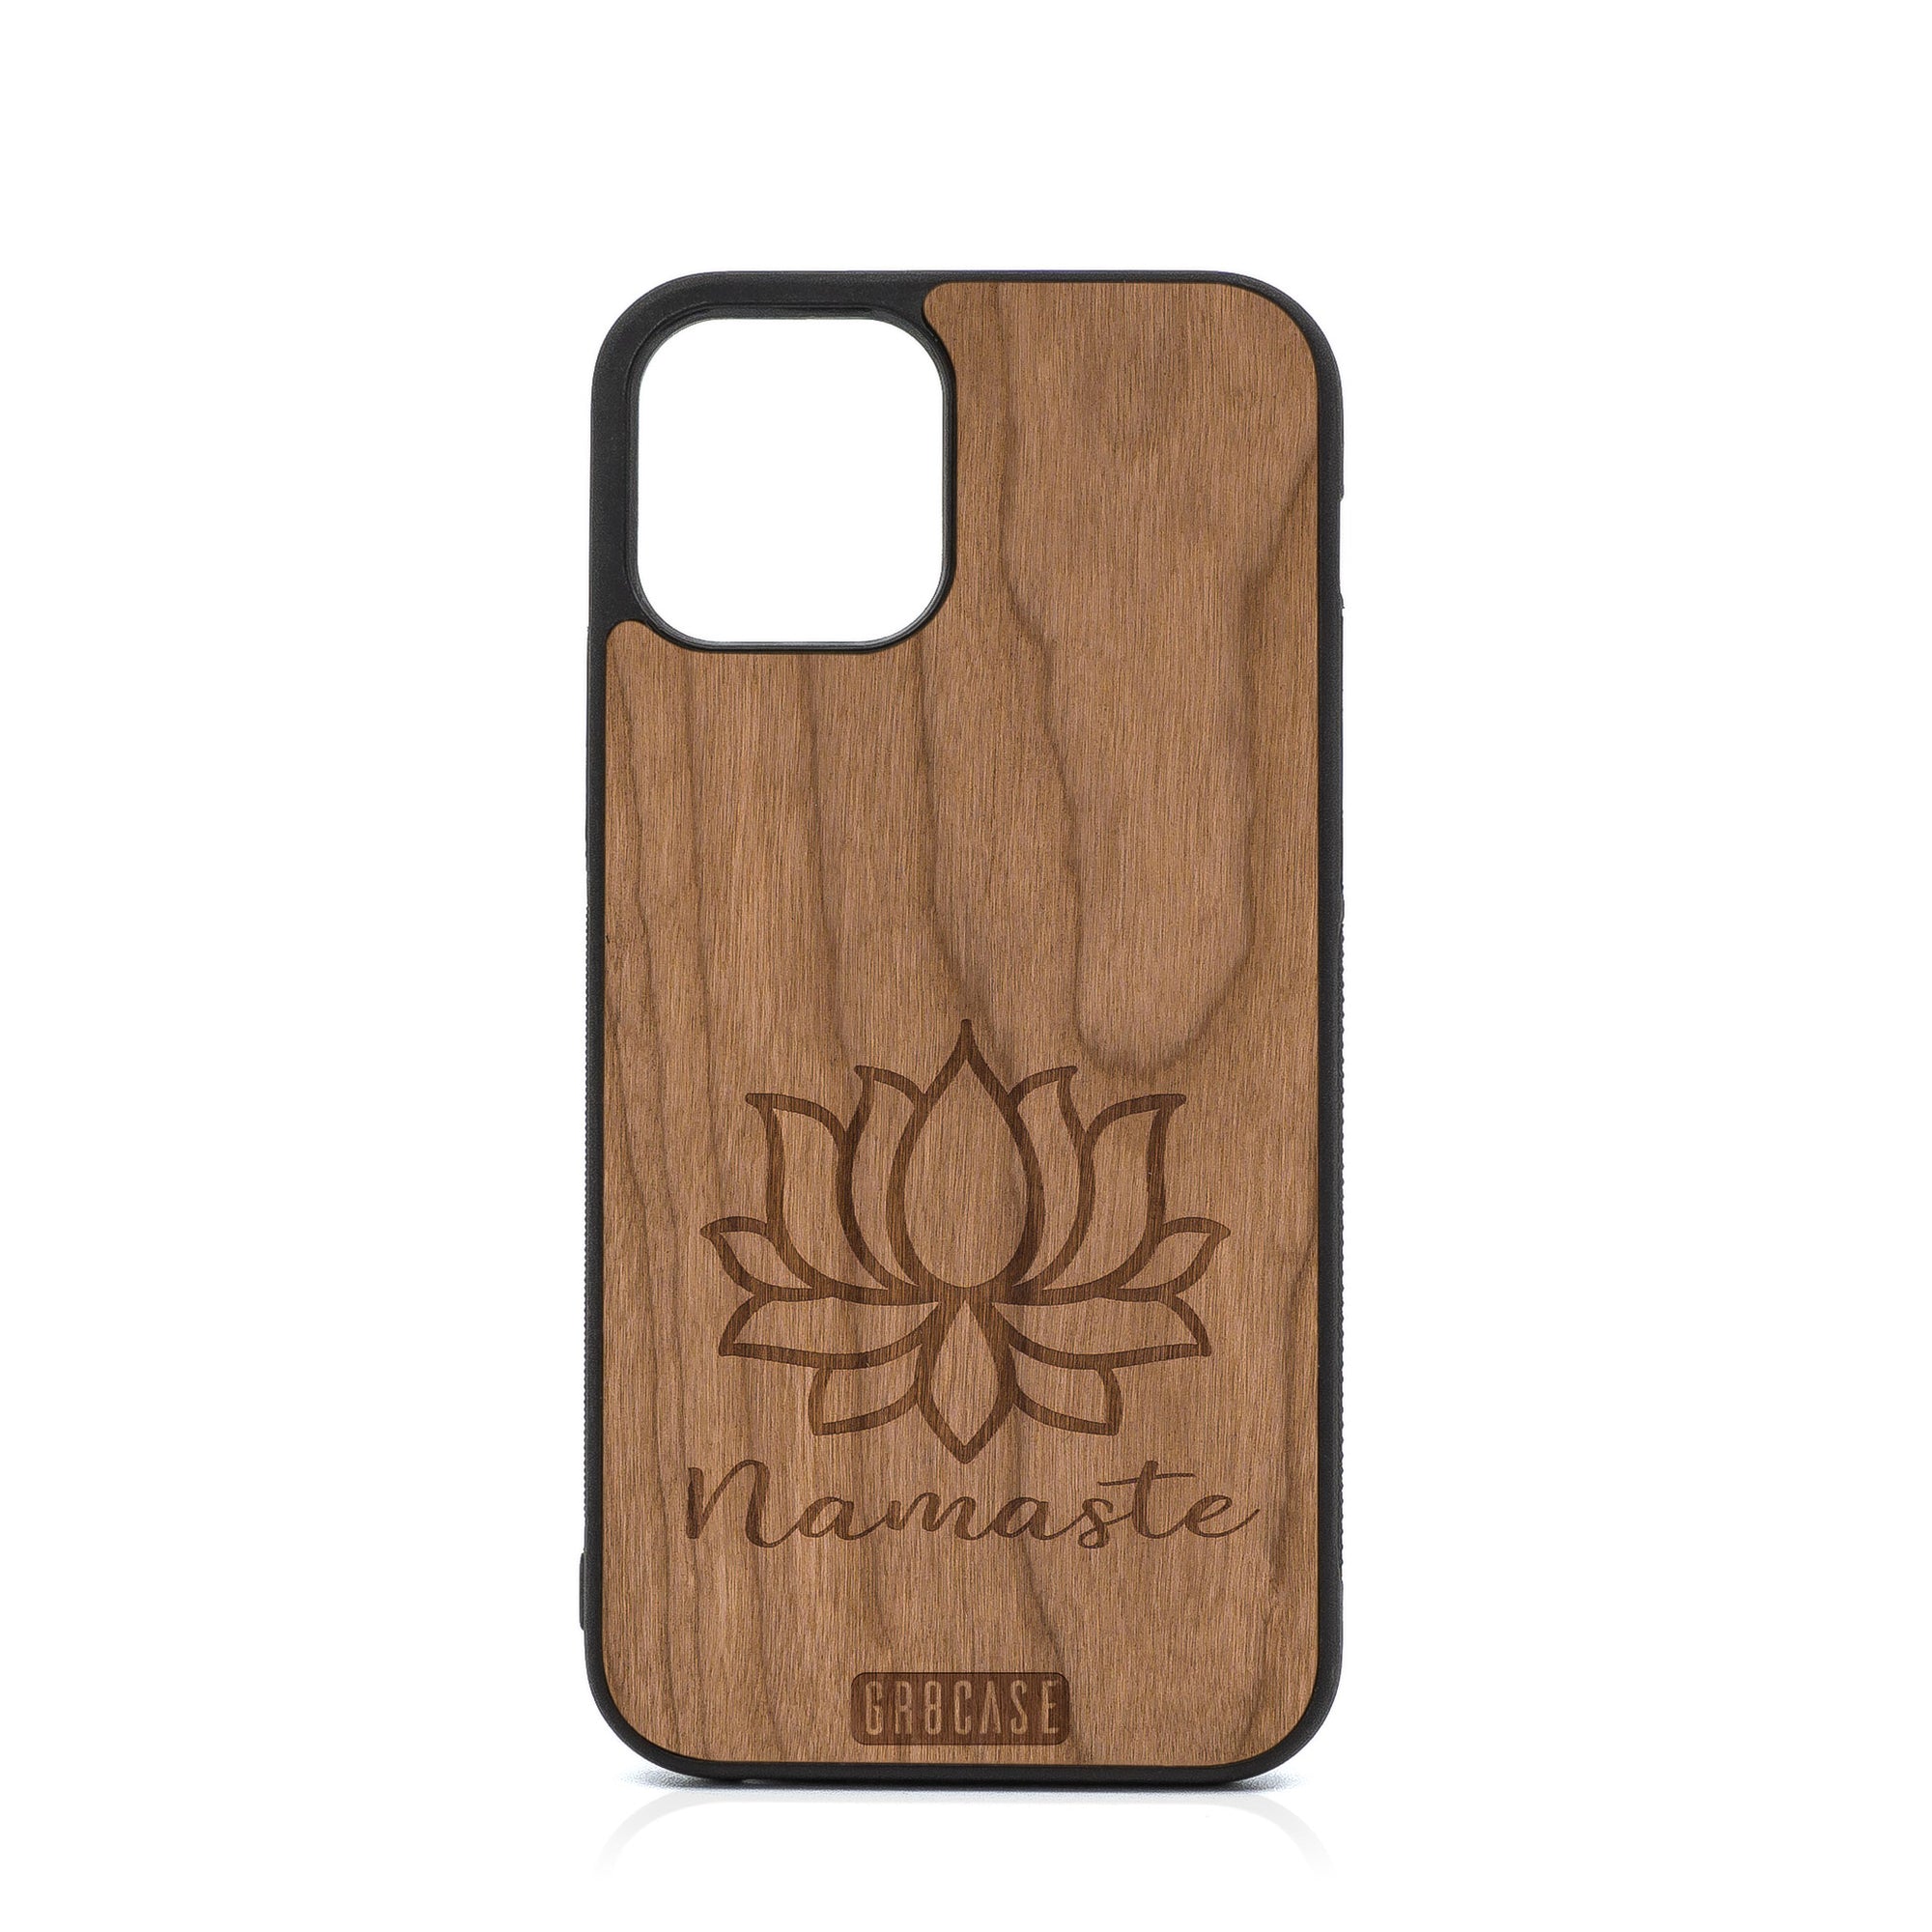 Namaste (Lotus Flower) Design Wood Case For iPhone 12